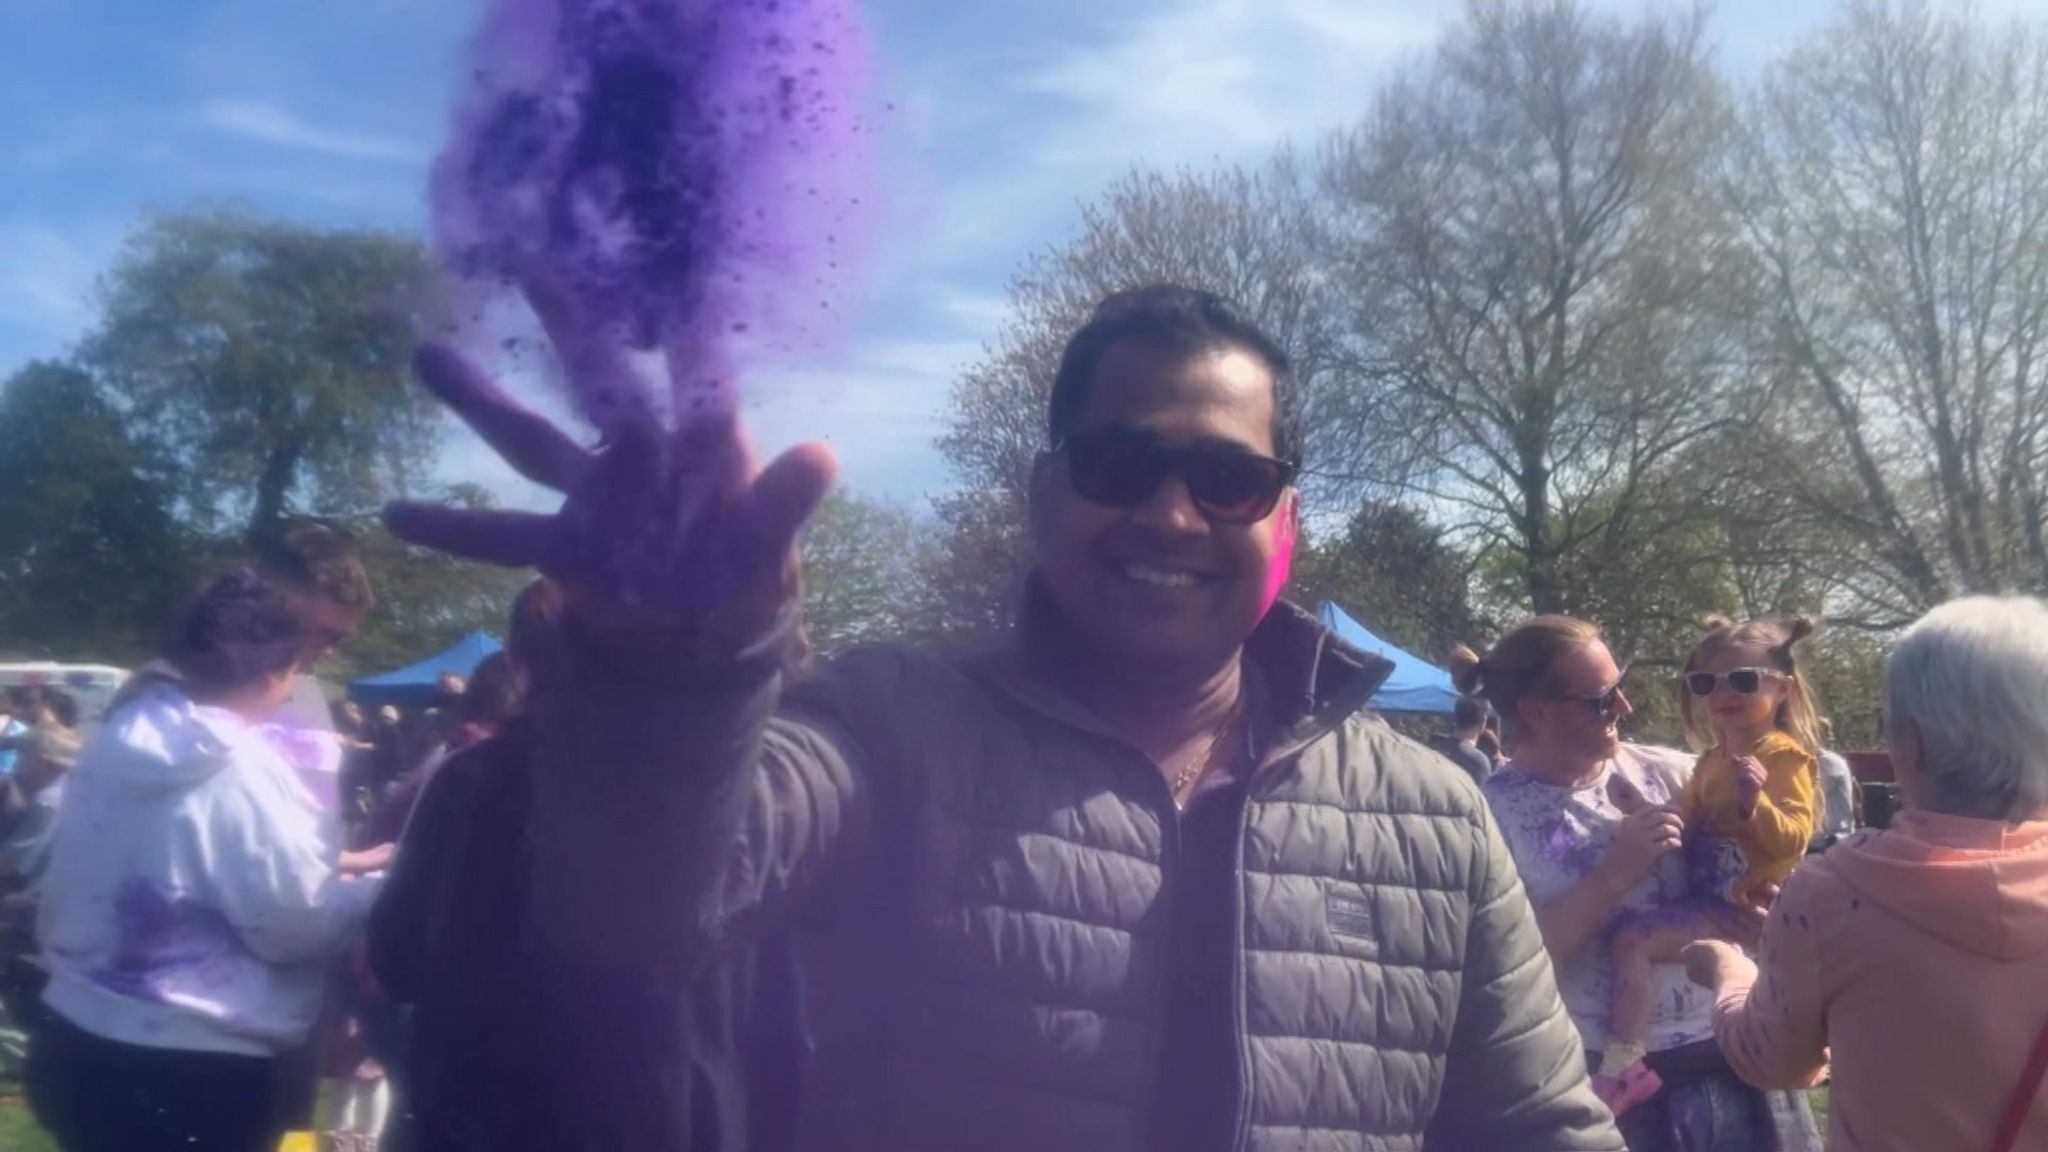 A man throws purple powder at the camera